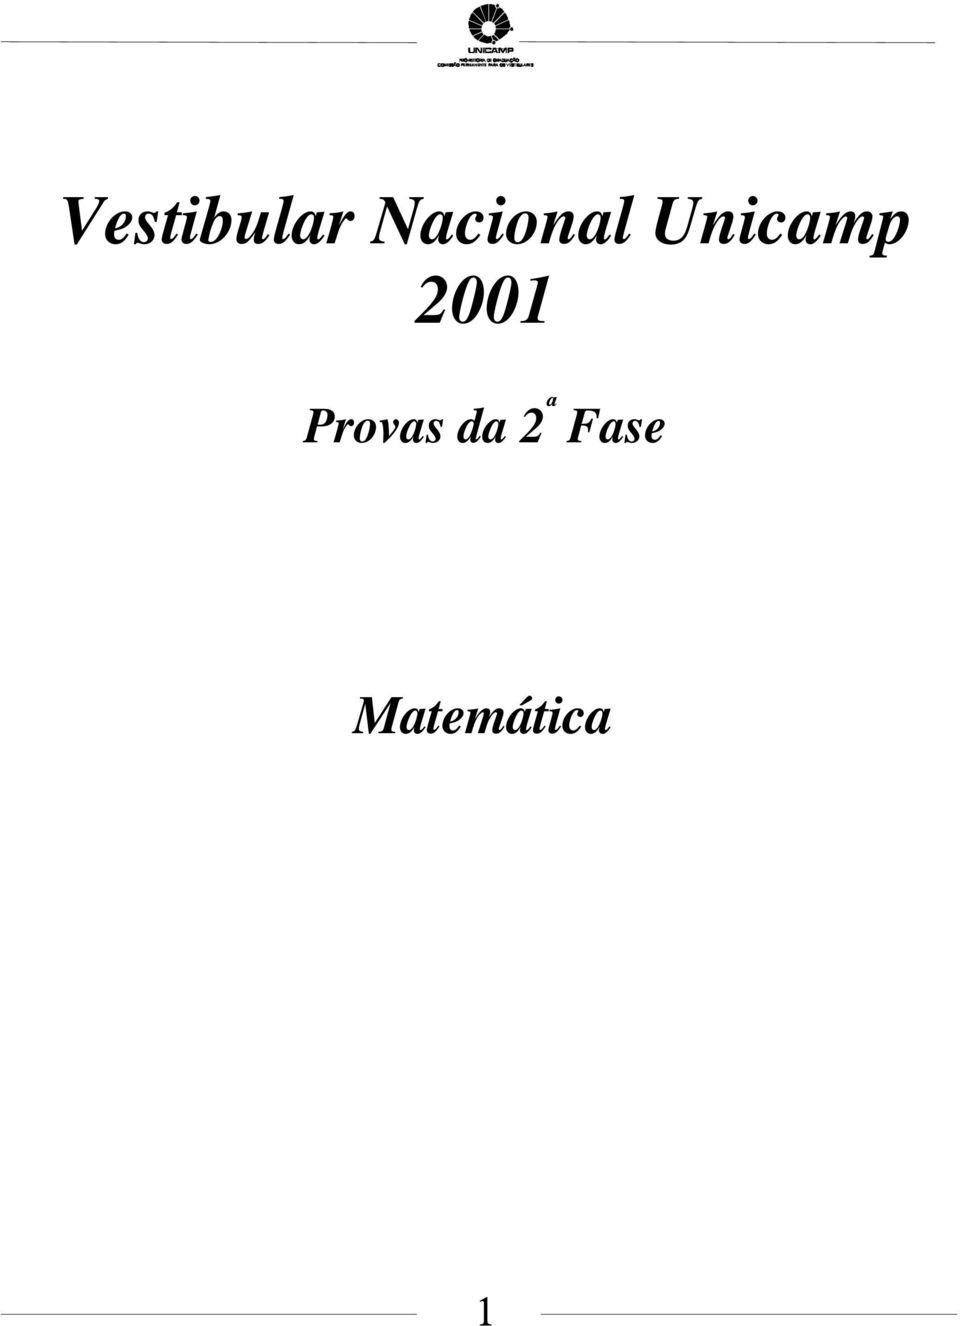 Unicamp 2001